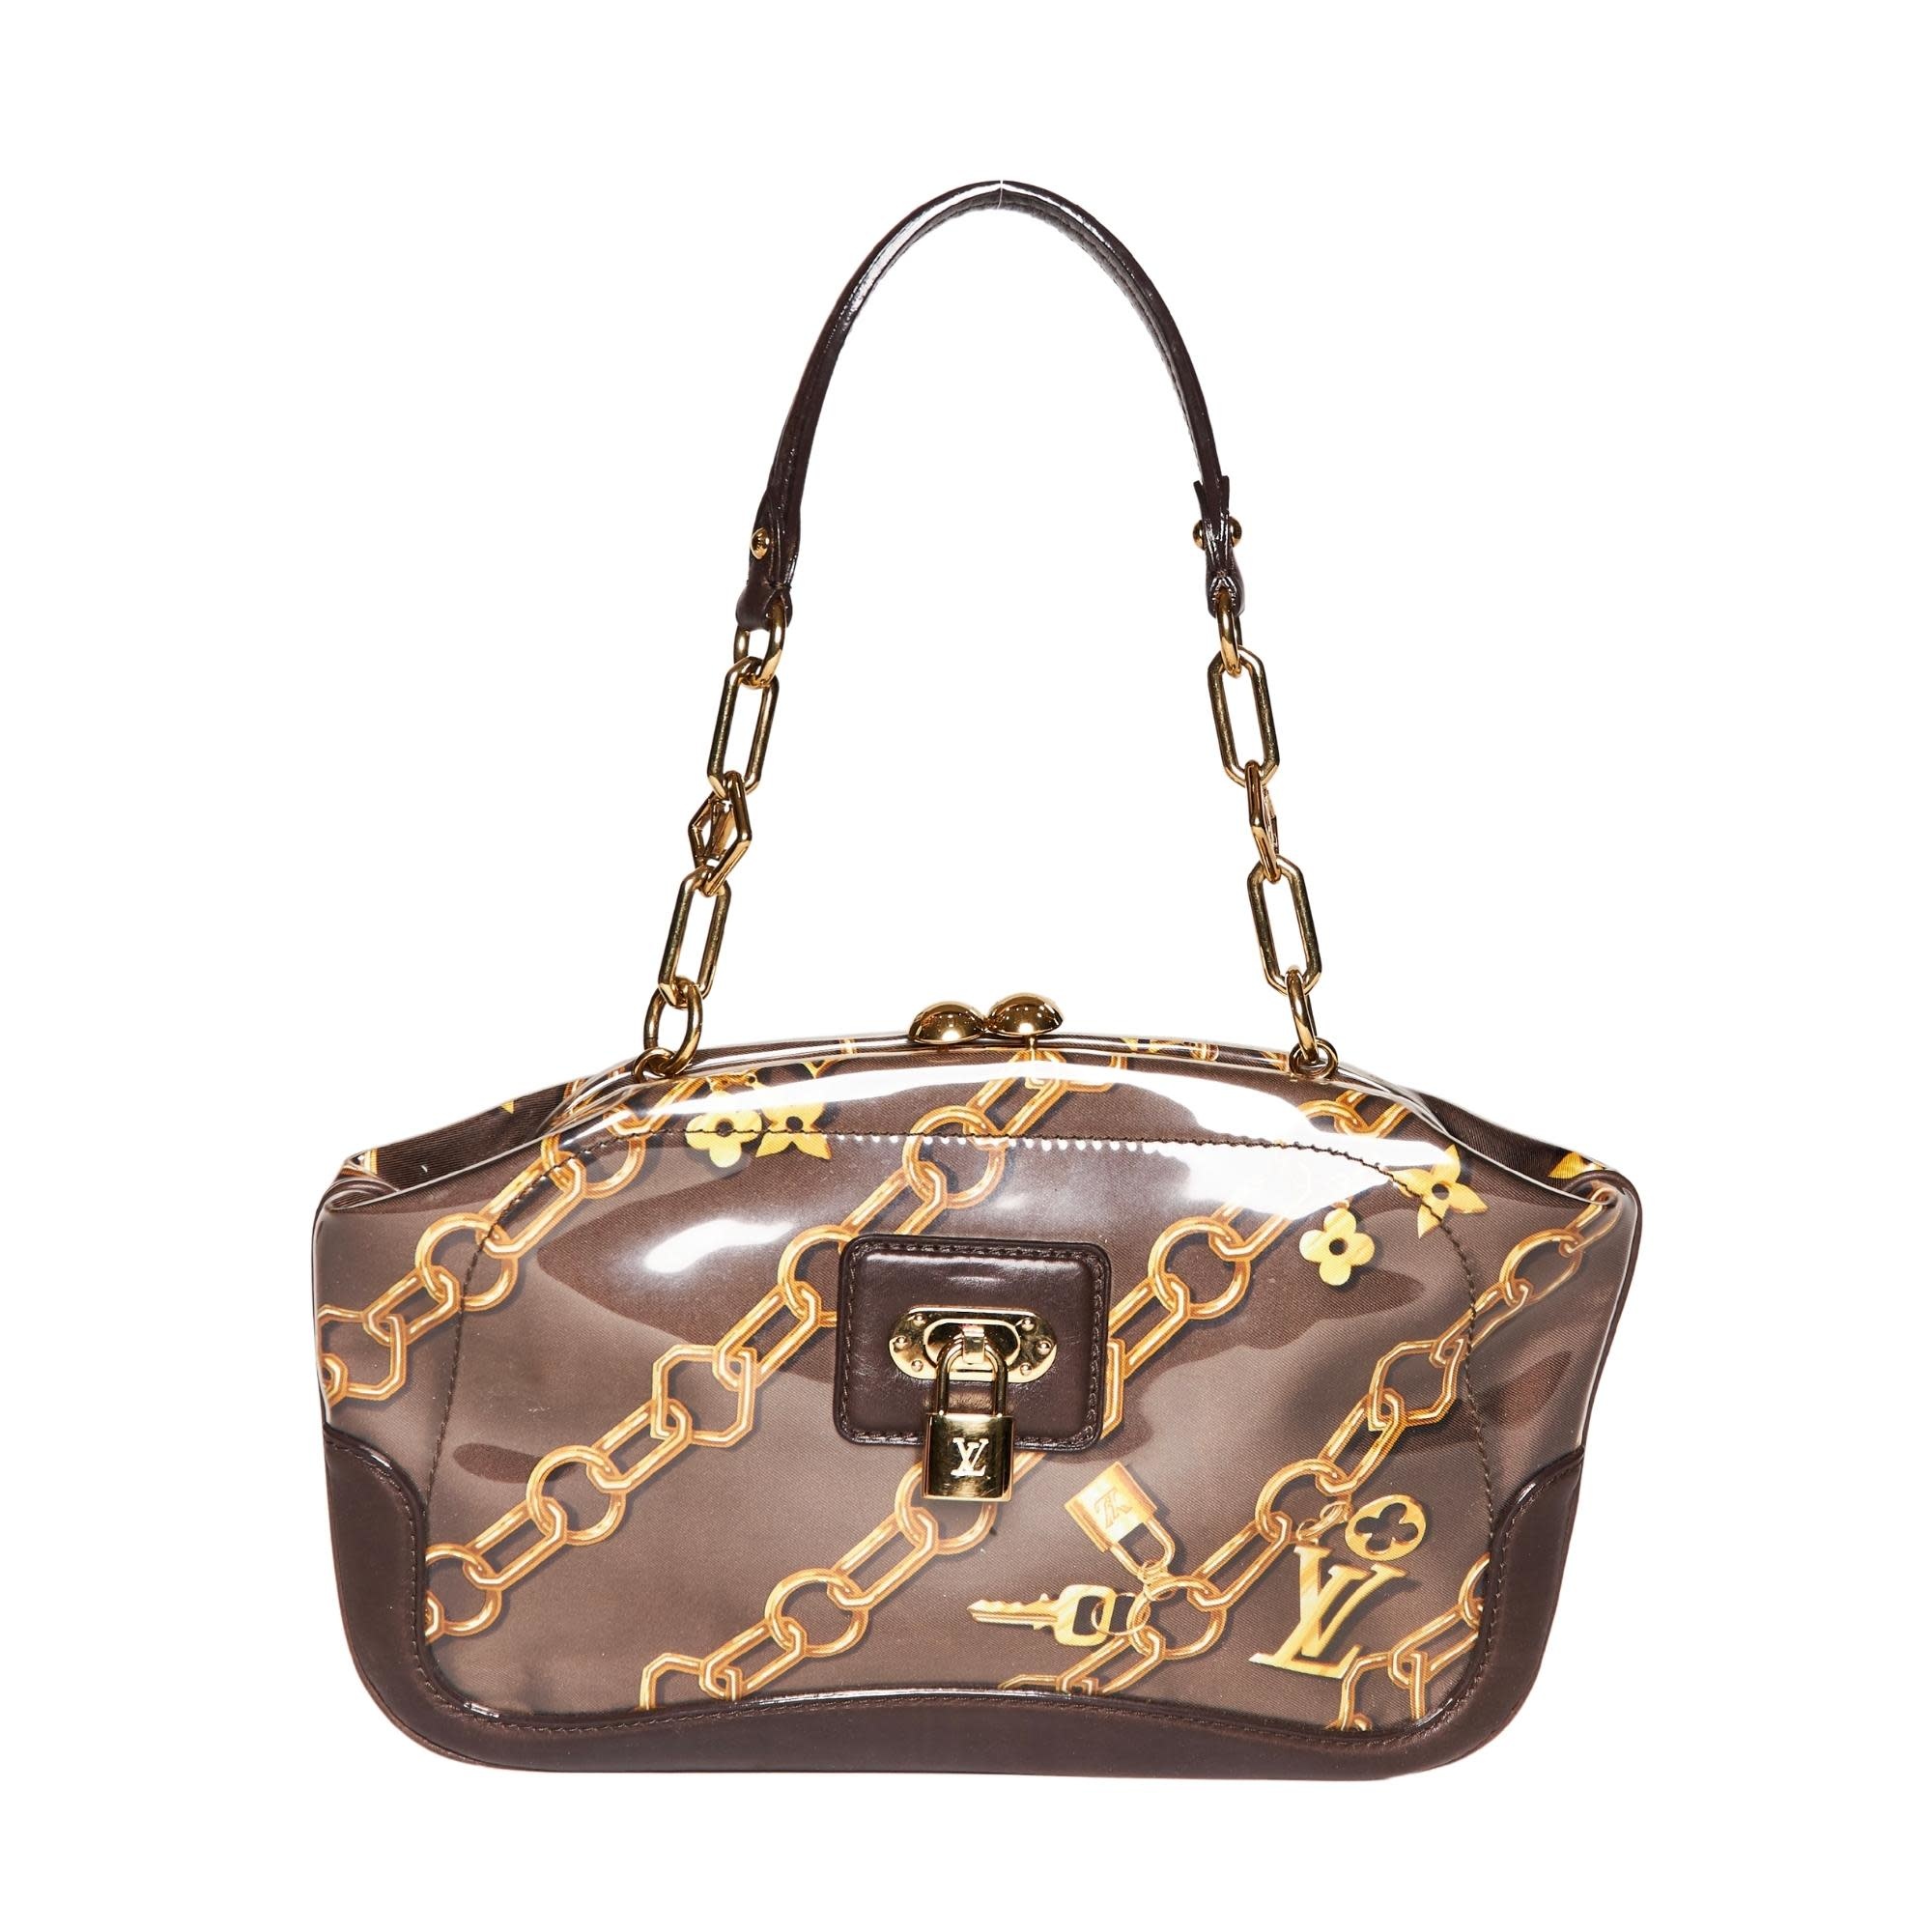 Louis Vuitton handbag smaller than grain of salt sells for more than  63000